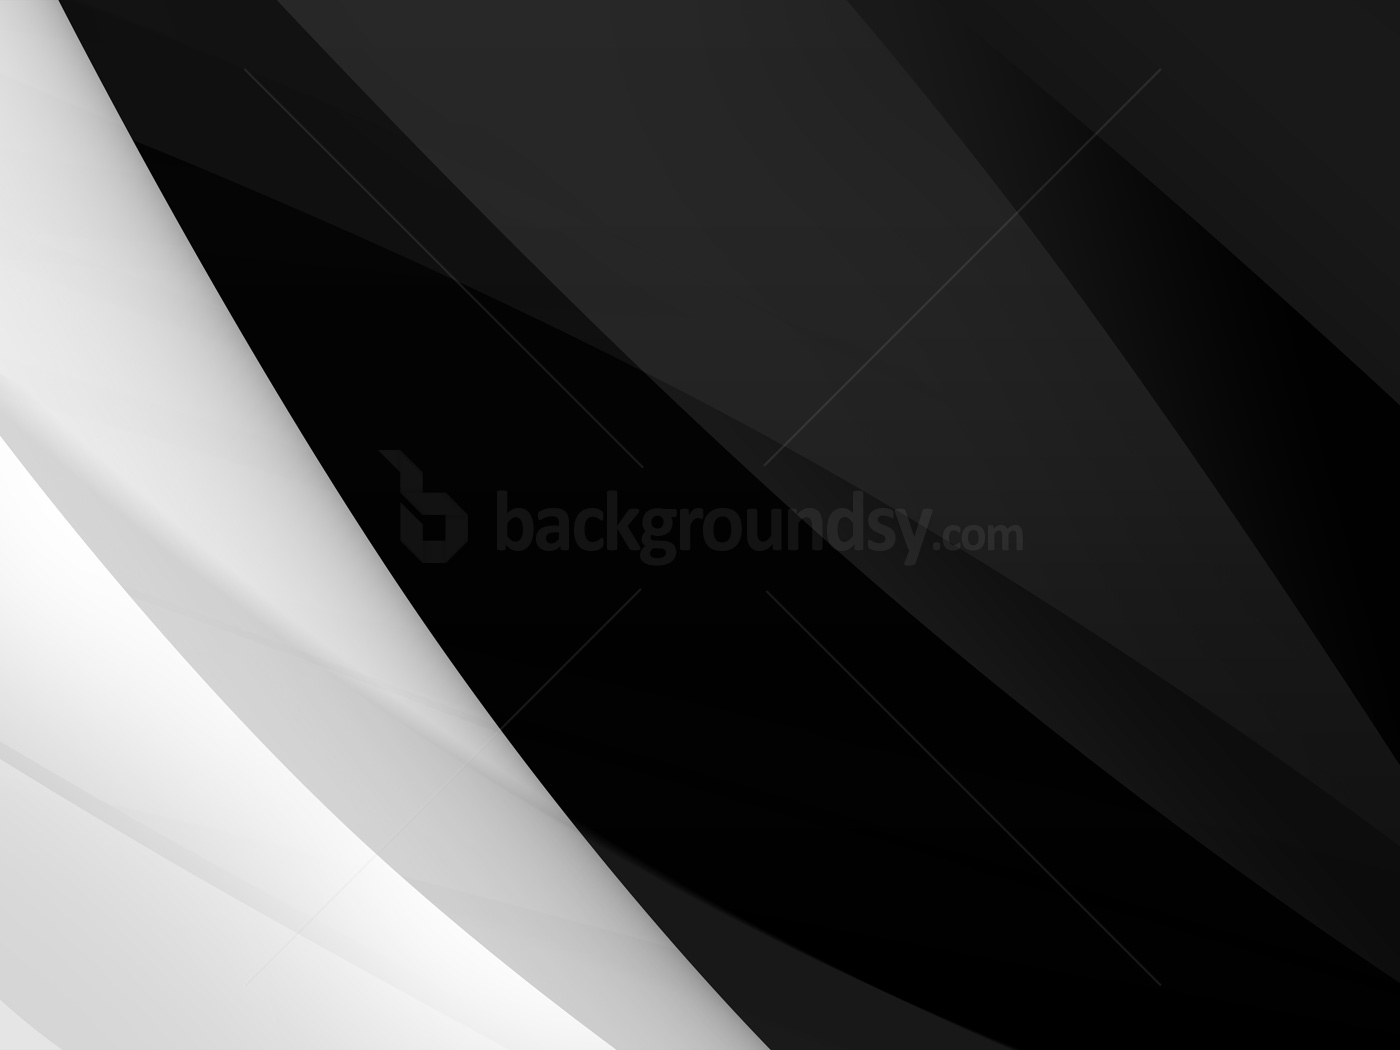 Black amp white abstract background Backgroundsycom